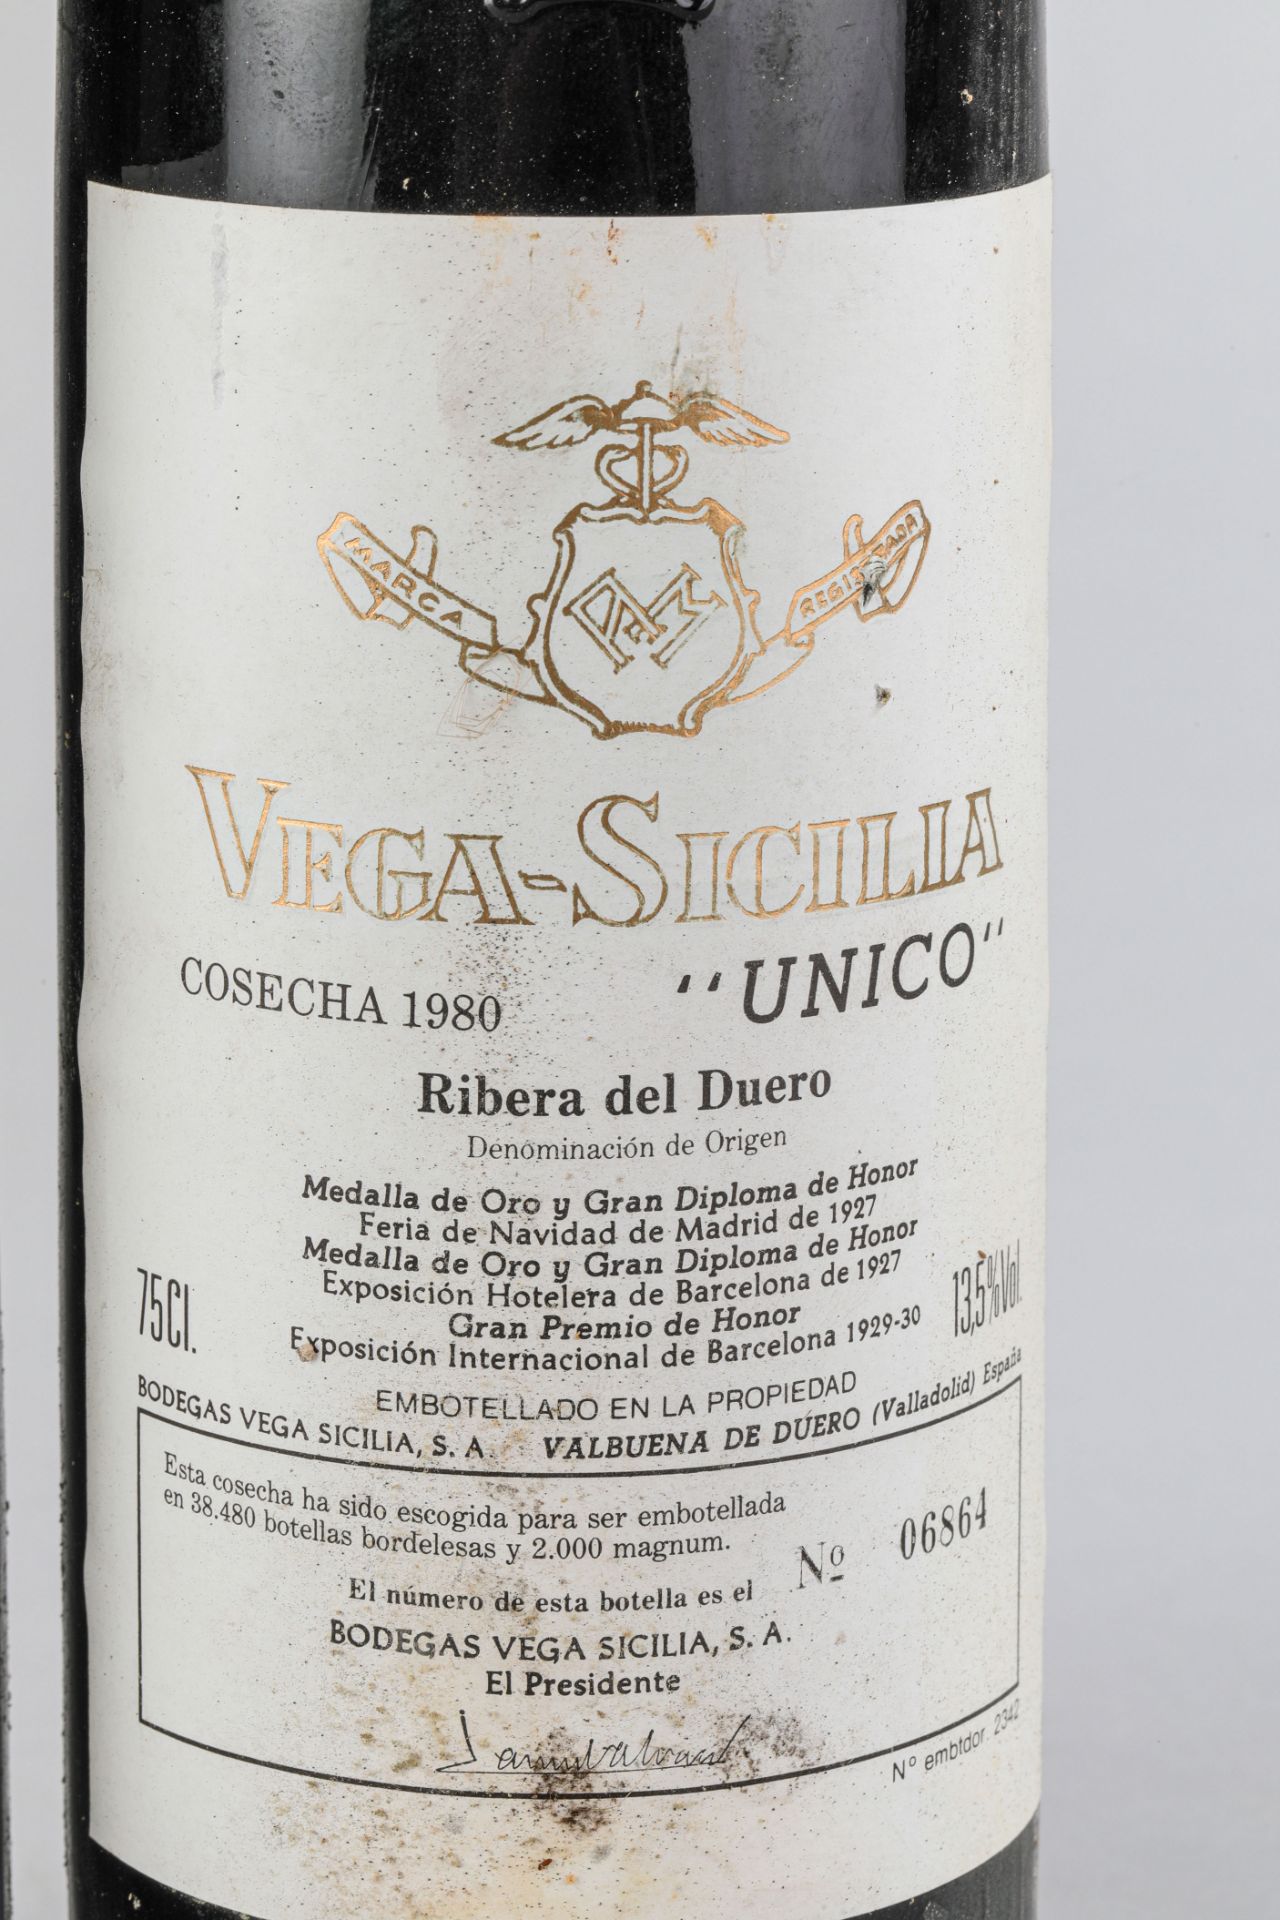 VEGA SICILIA UNICO. 1980. 2 bouteilles. Ribera del Duero. N°06860 et N°06864 sur production 38 480 - Image 4 of 6